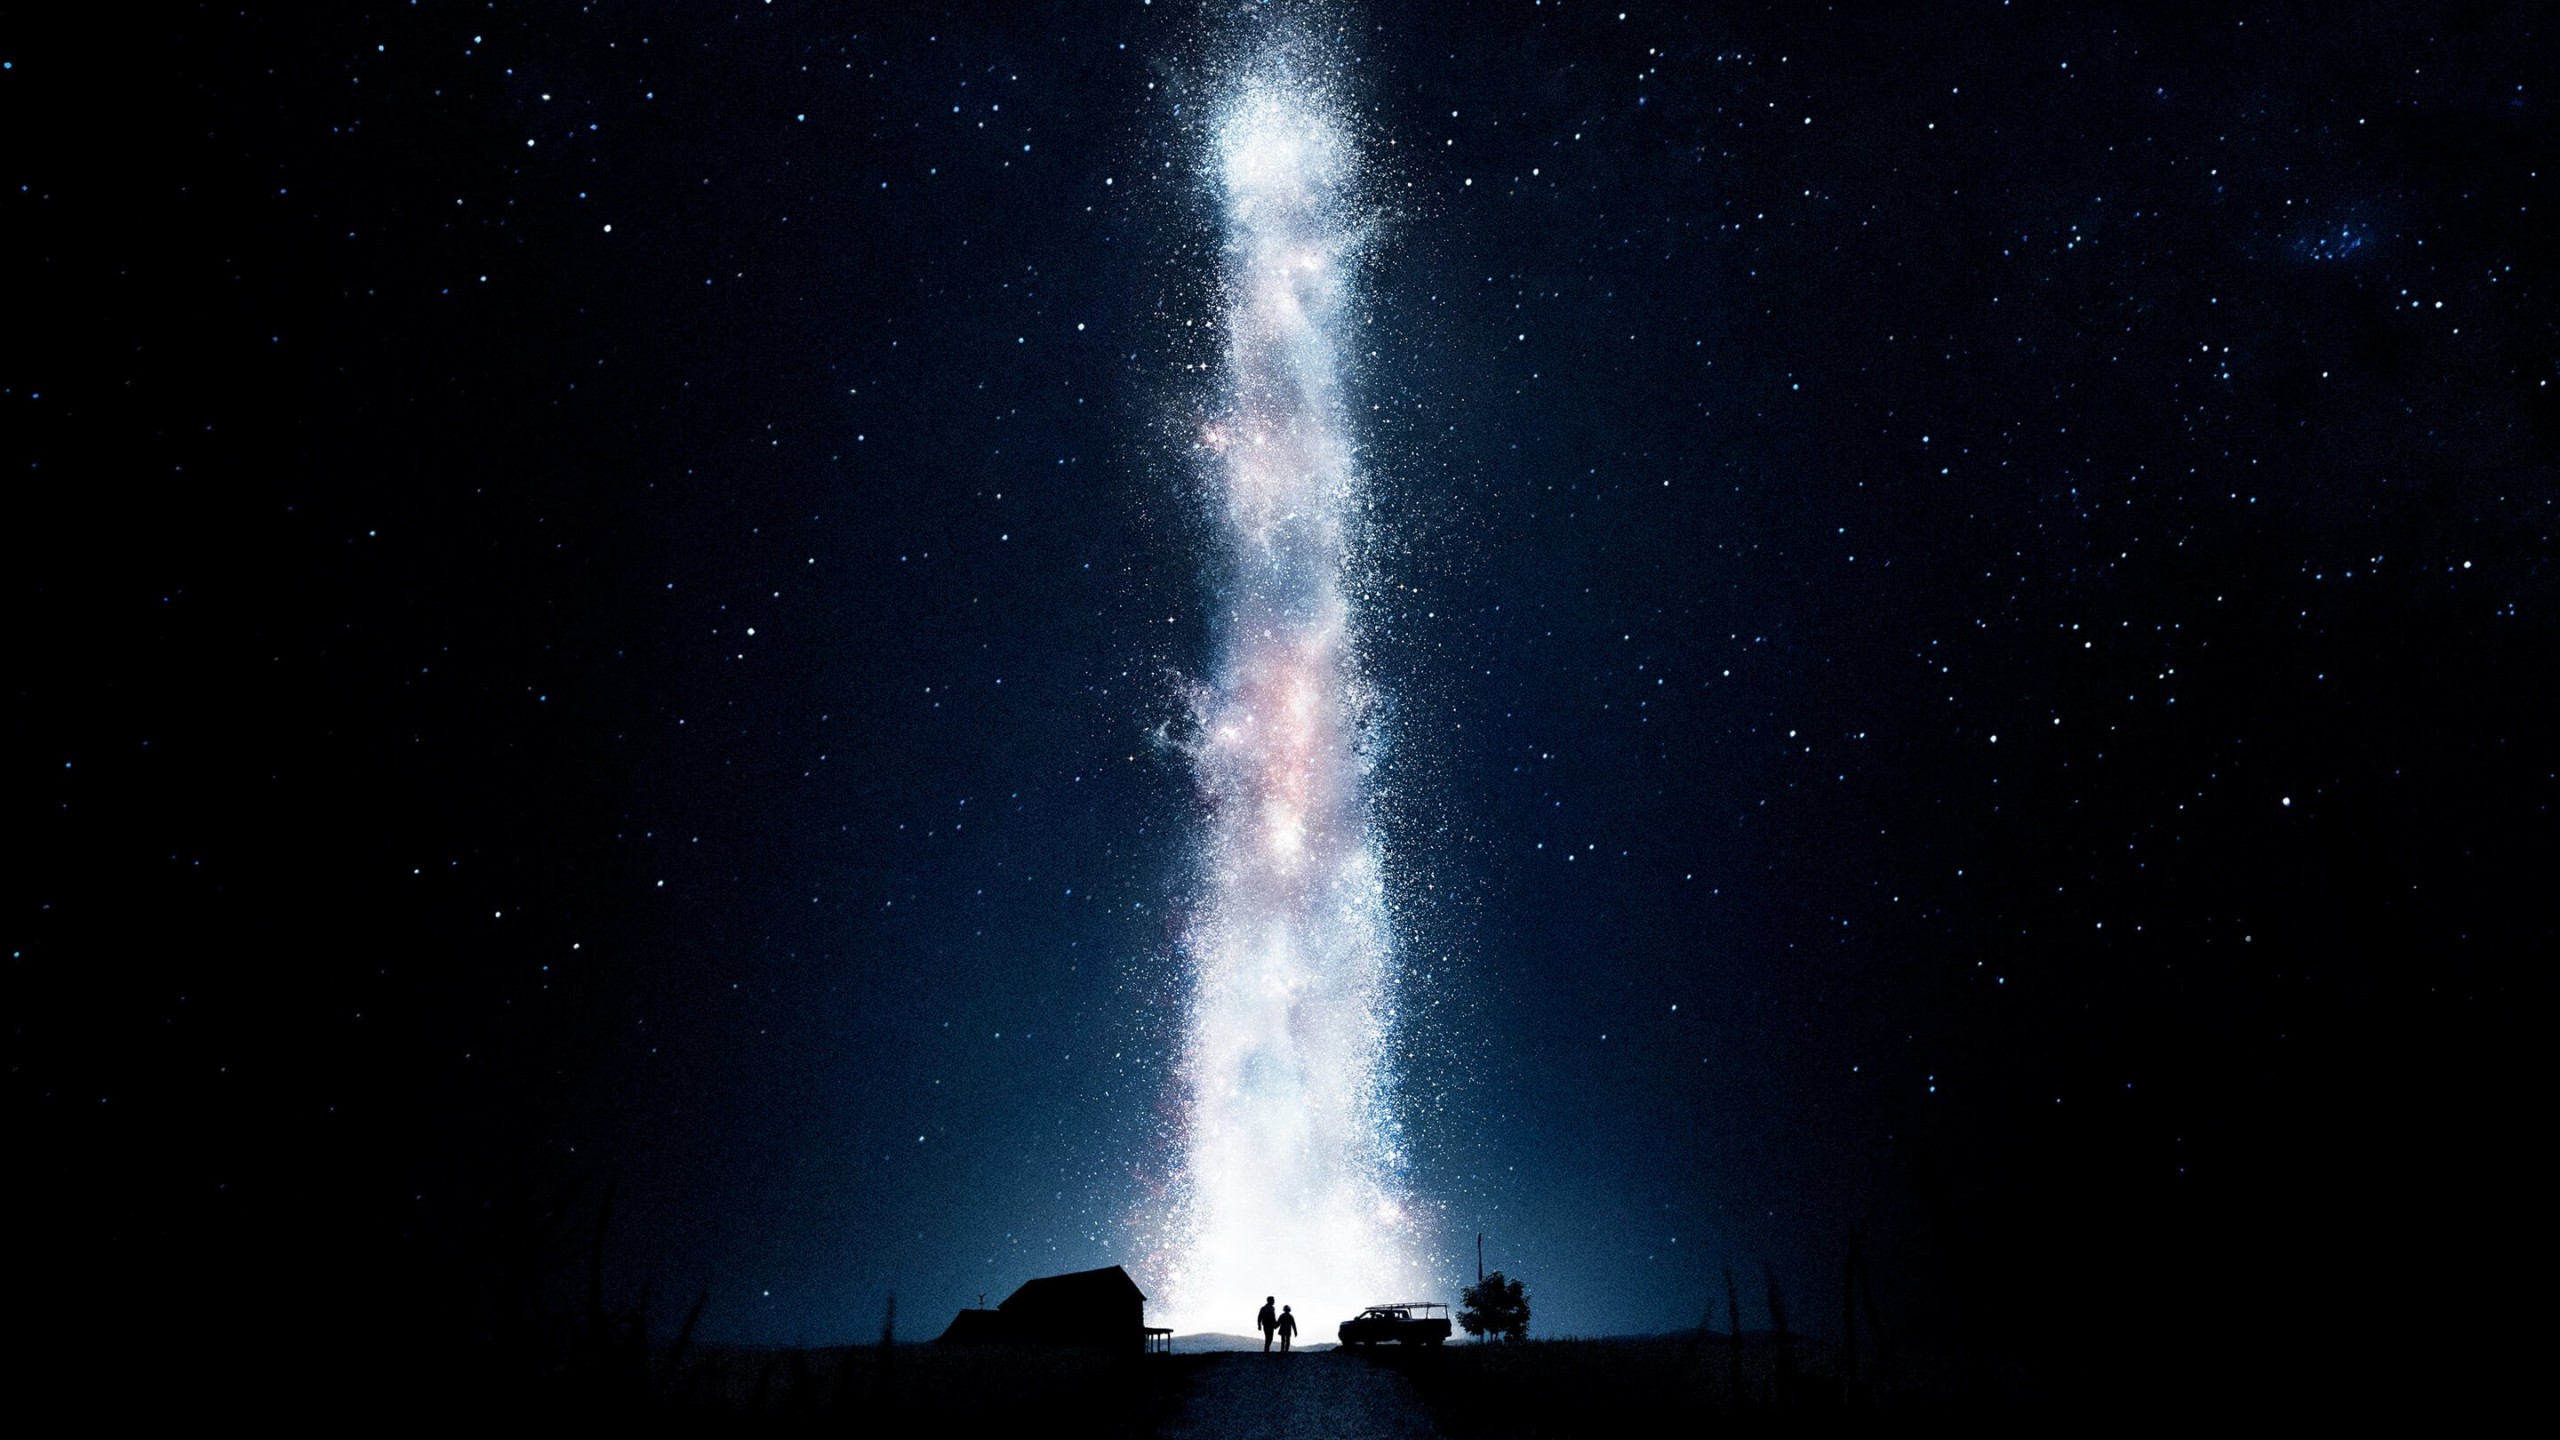 Interstellar (2014) Wallpaper for Social Media YouTube Channel Art